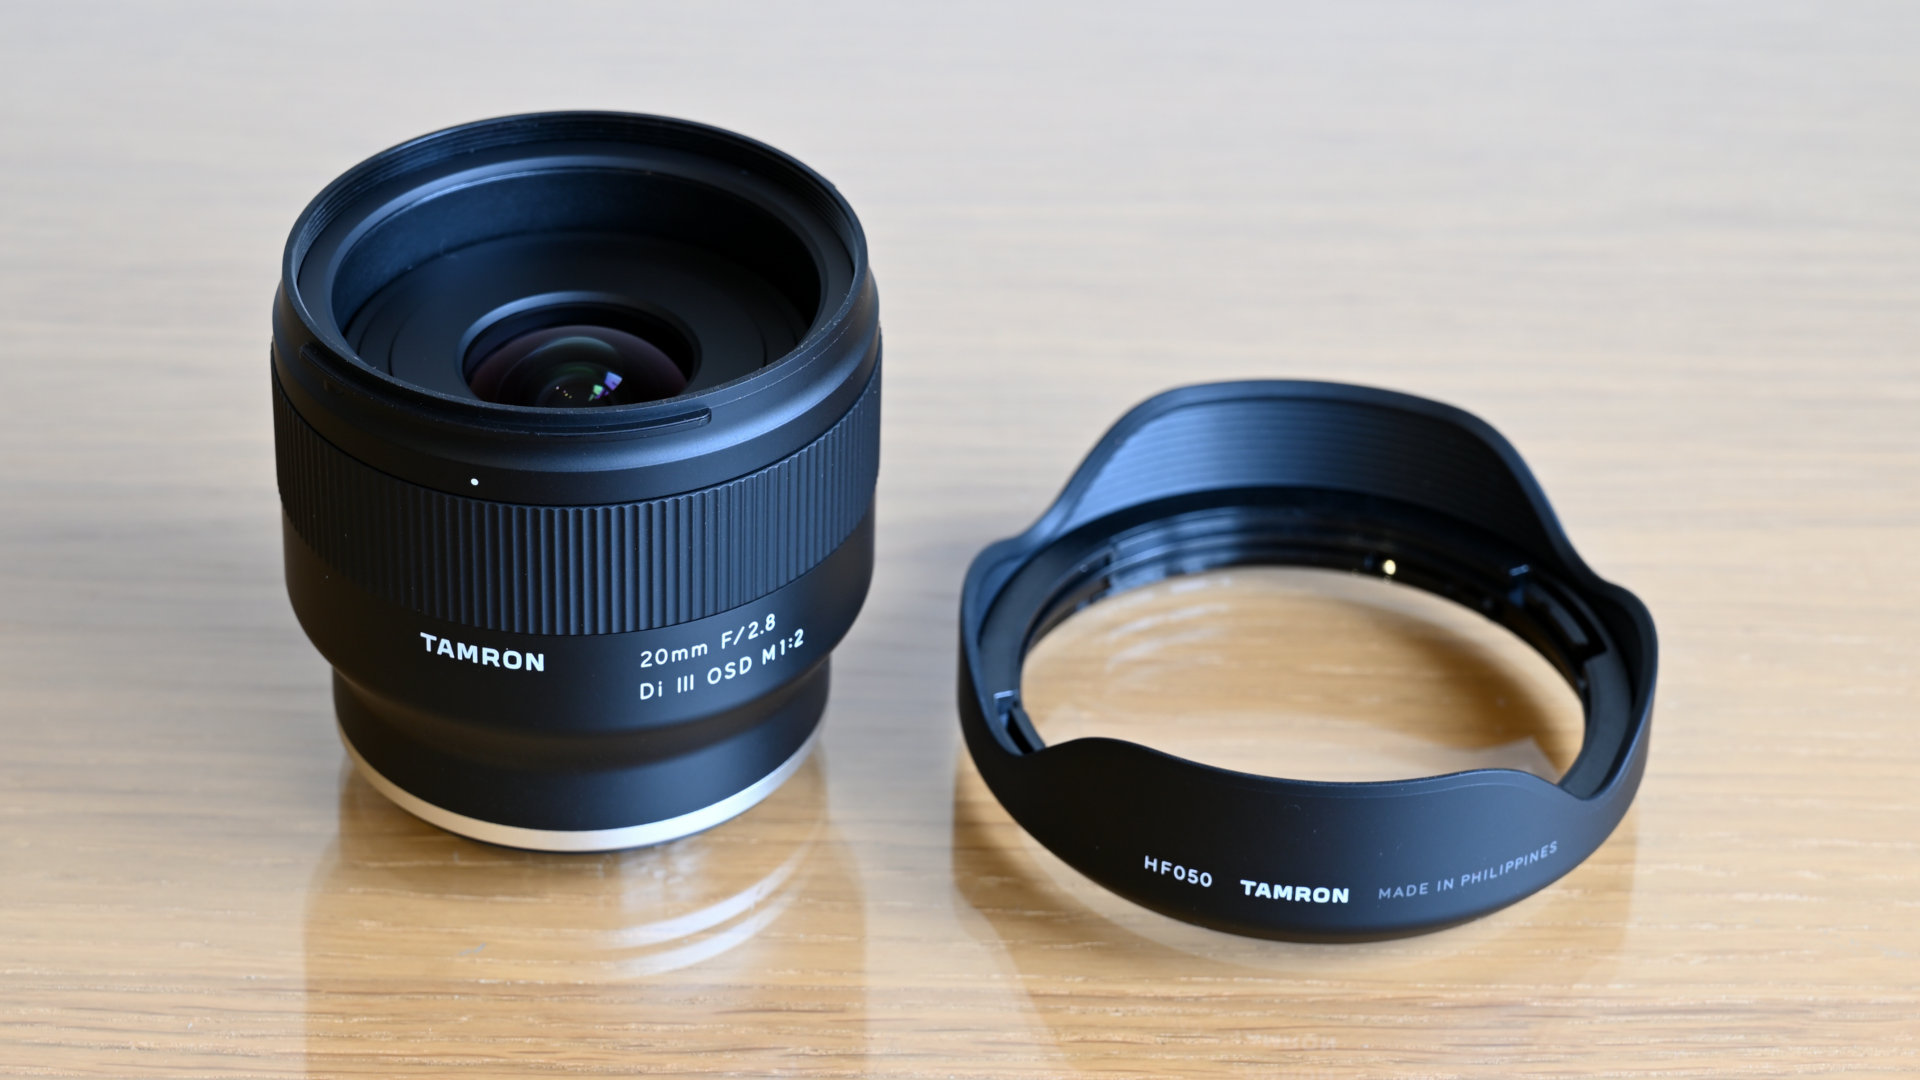 Best Sony lenses: Tamron 20mm f/2.8 Di III OSD